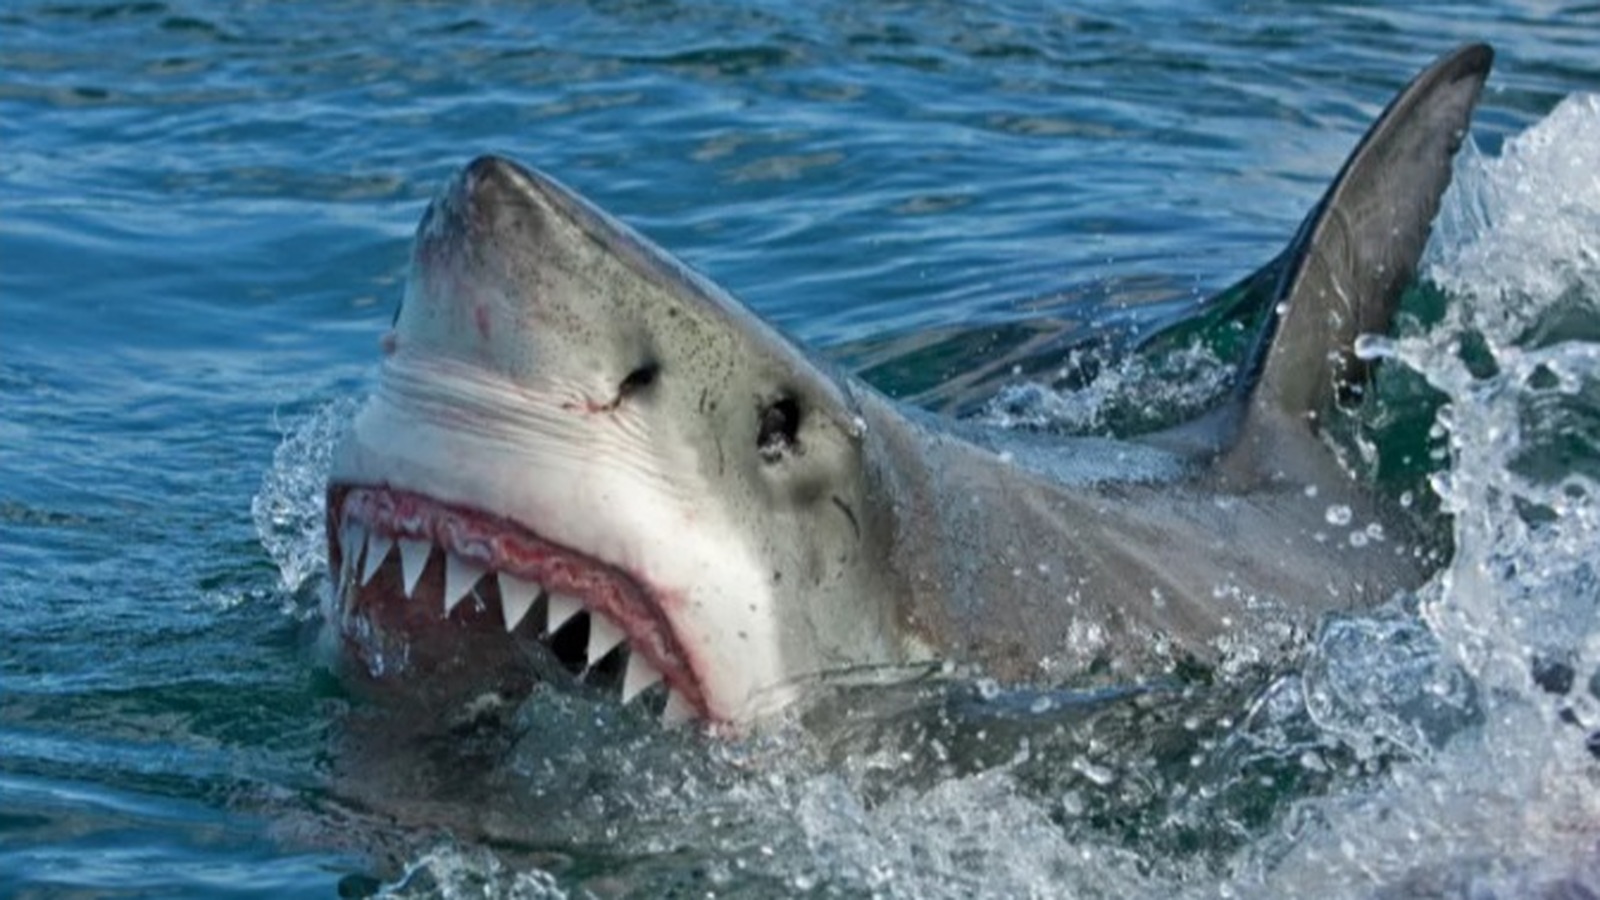 Are There Sharks At Topsail Beach, NC? - Dutch Shark Society